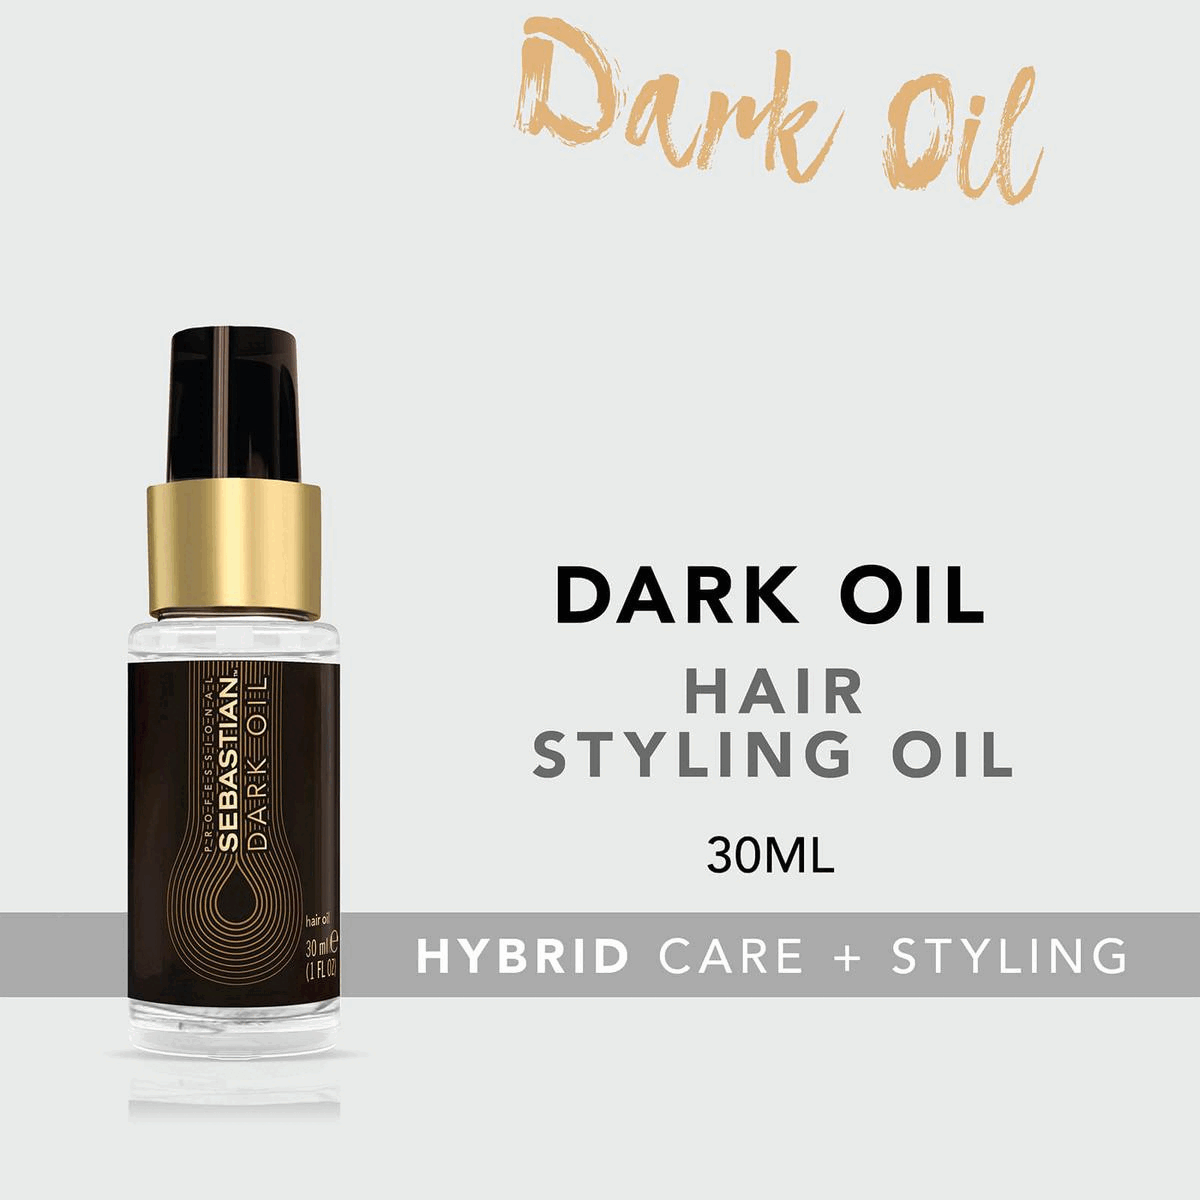 Dark oil, hair styling oil,lightweight finish, 3x smoother, replenish  hair,sandalwood,cedarwood,argan oil
            